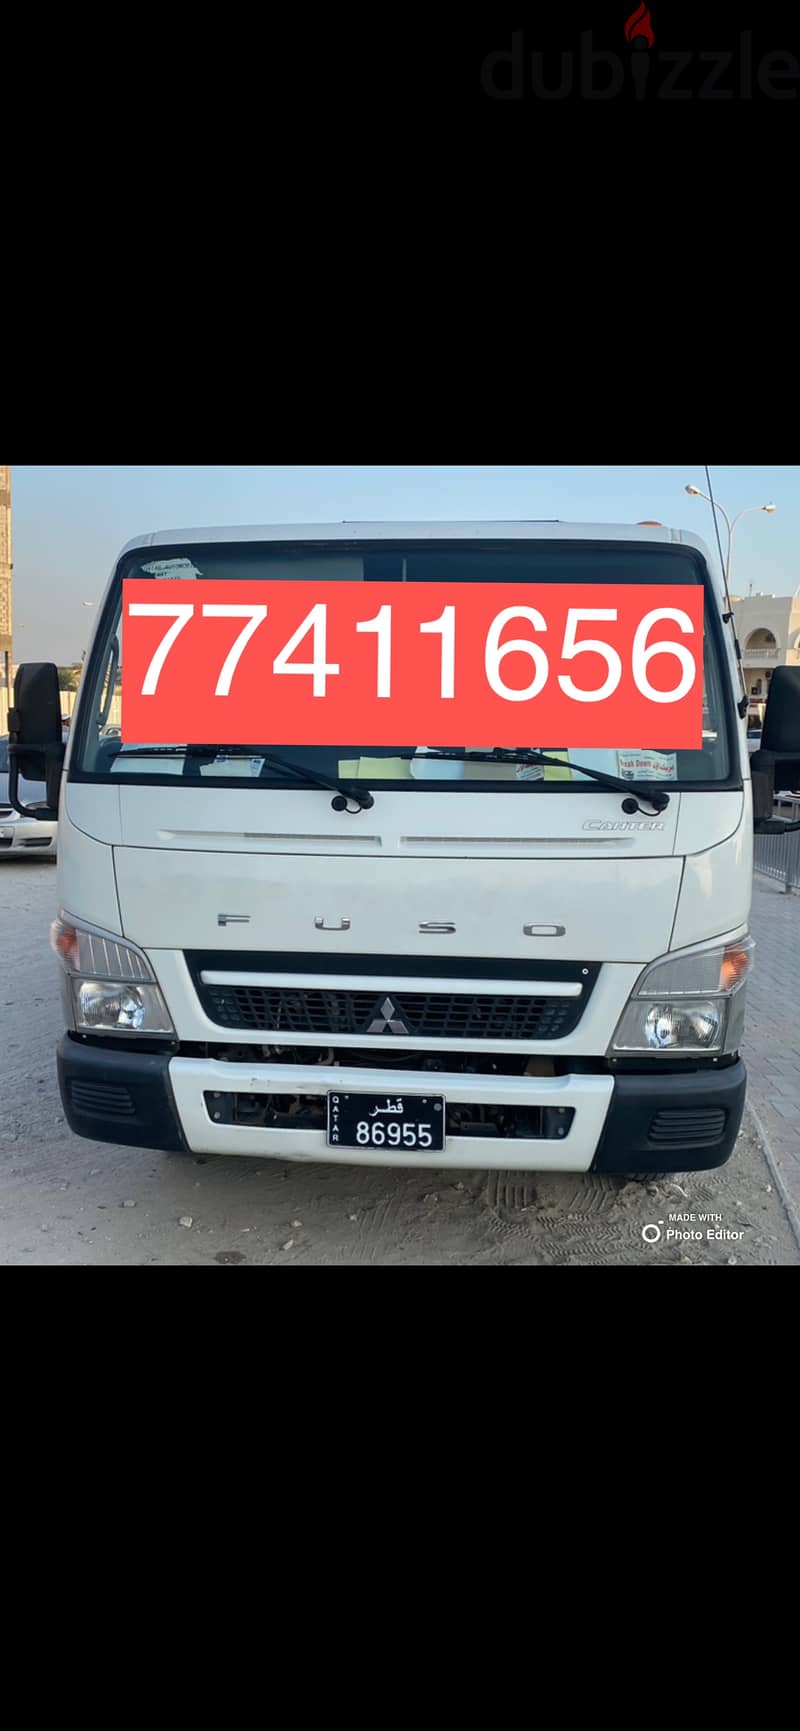 Breakdown#Service #Tow truck #Salwa#SalwaRoad# 77411656 0